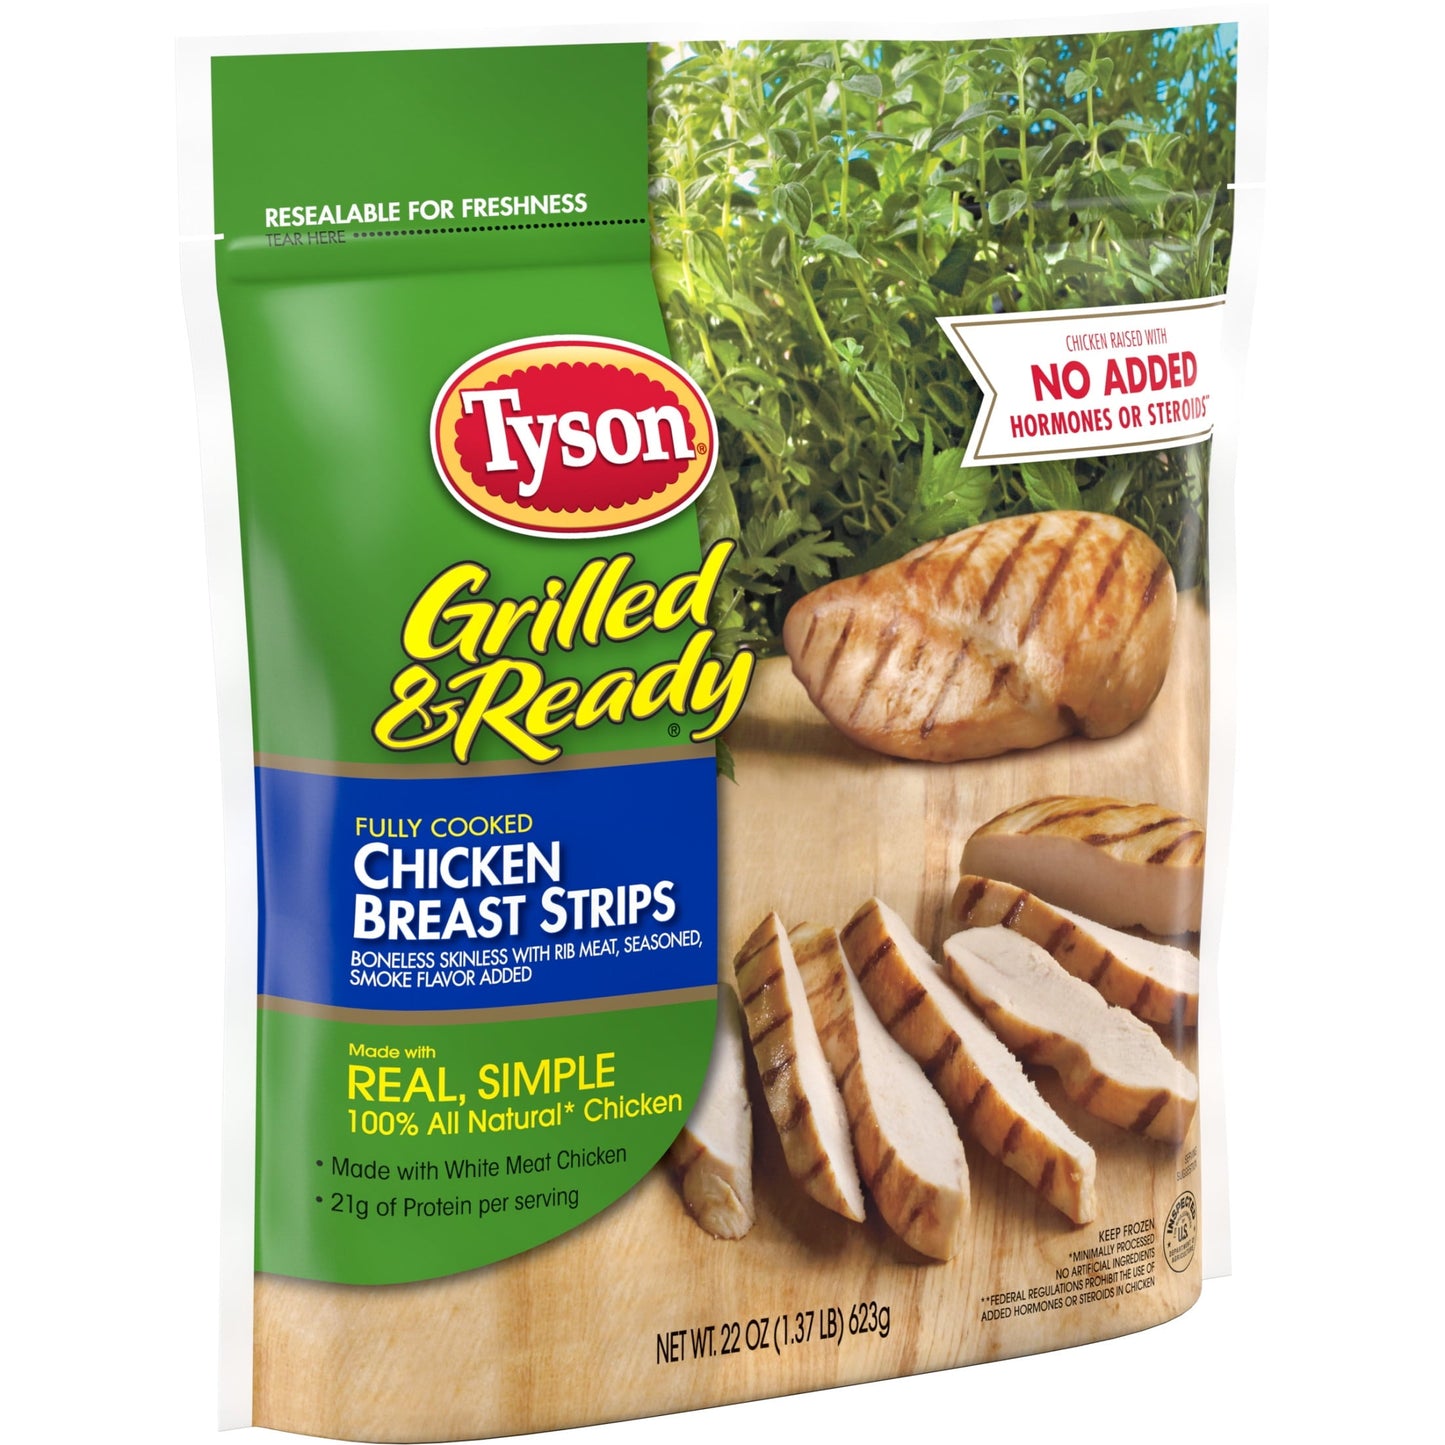 Tyson Grilled & Ready Chicken Breast Strips, 1.37 lb Bag (Frozen)